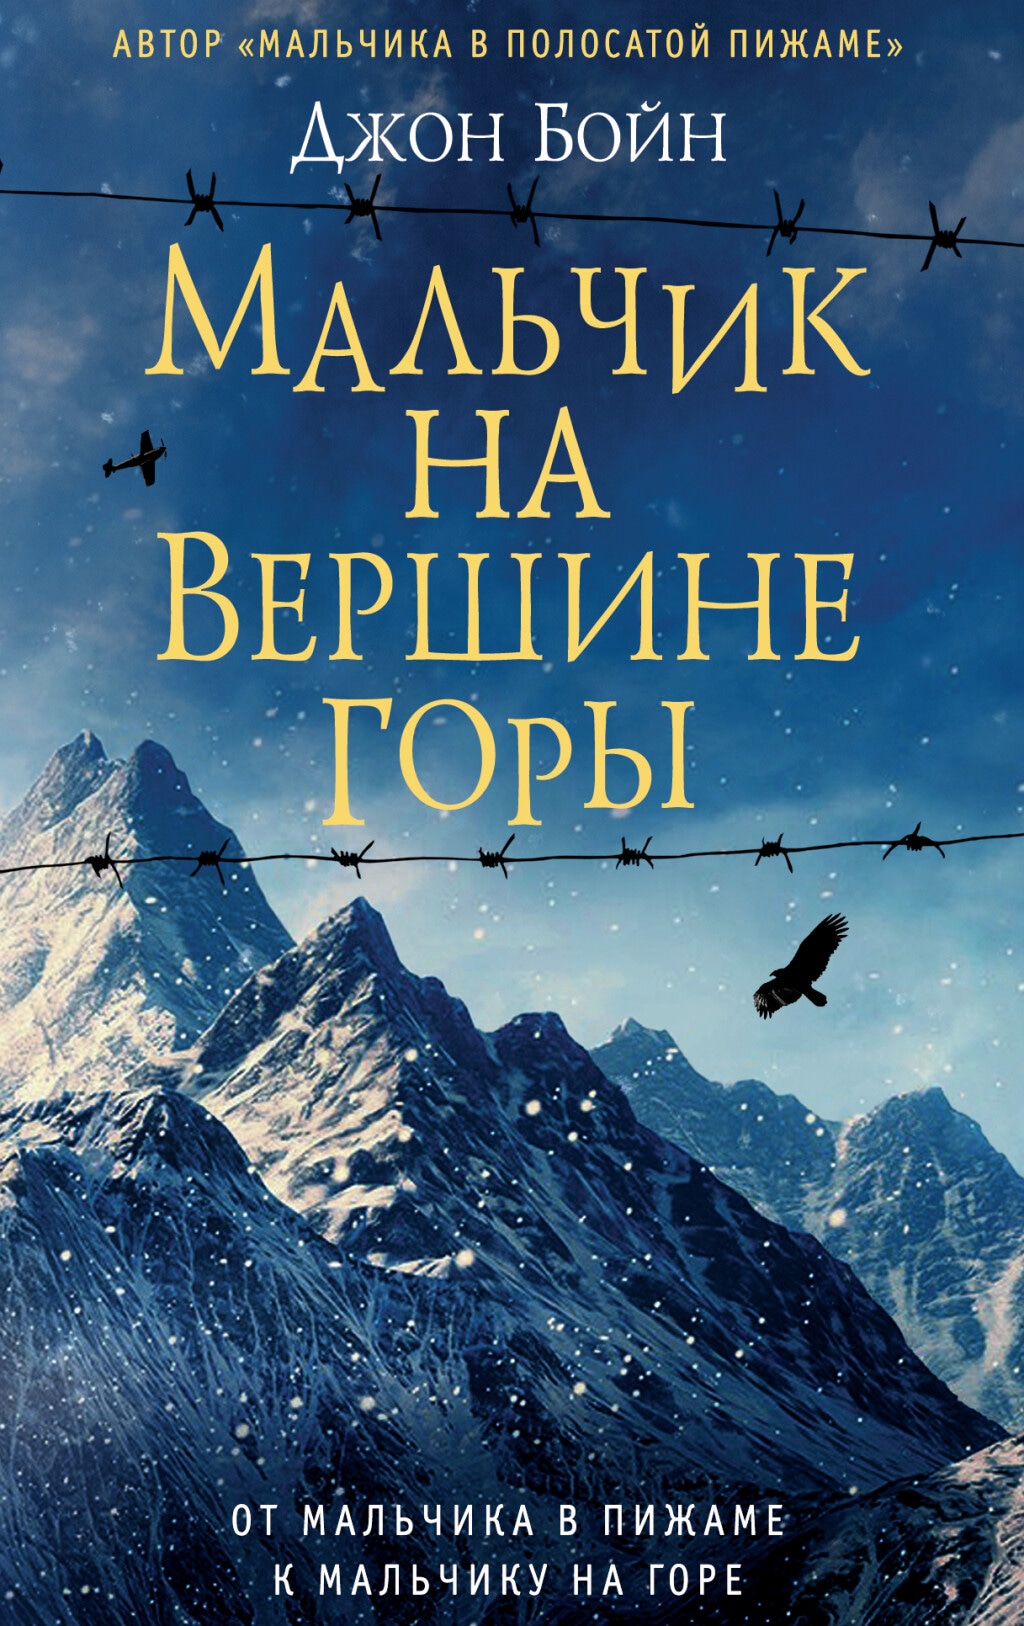 Book “Мальчик на вершине горы” by Джон Бойн — 2016